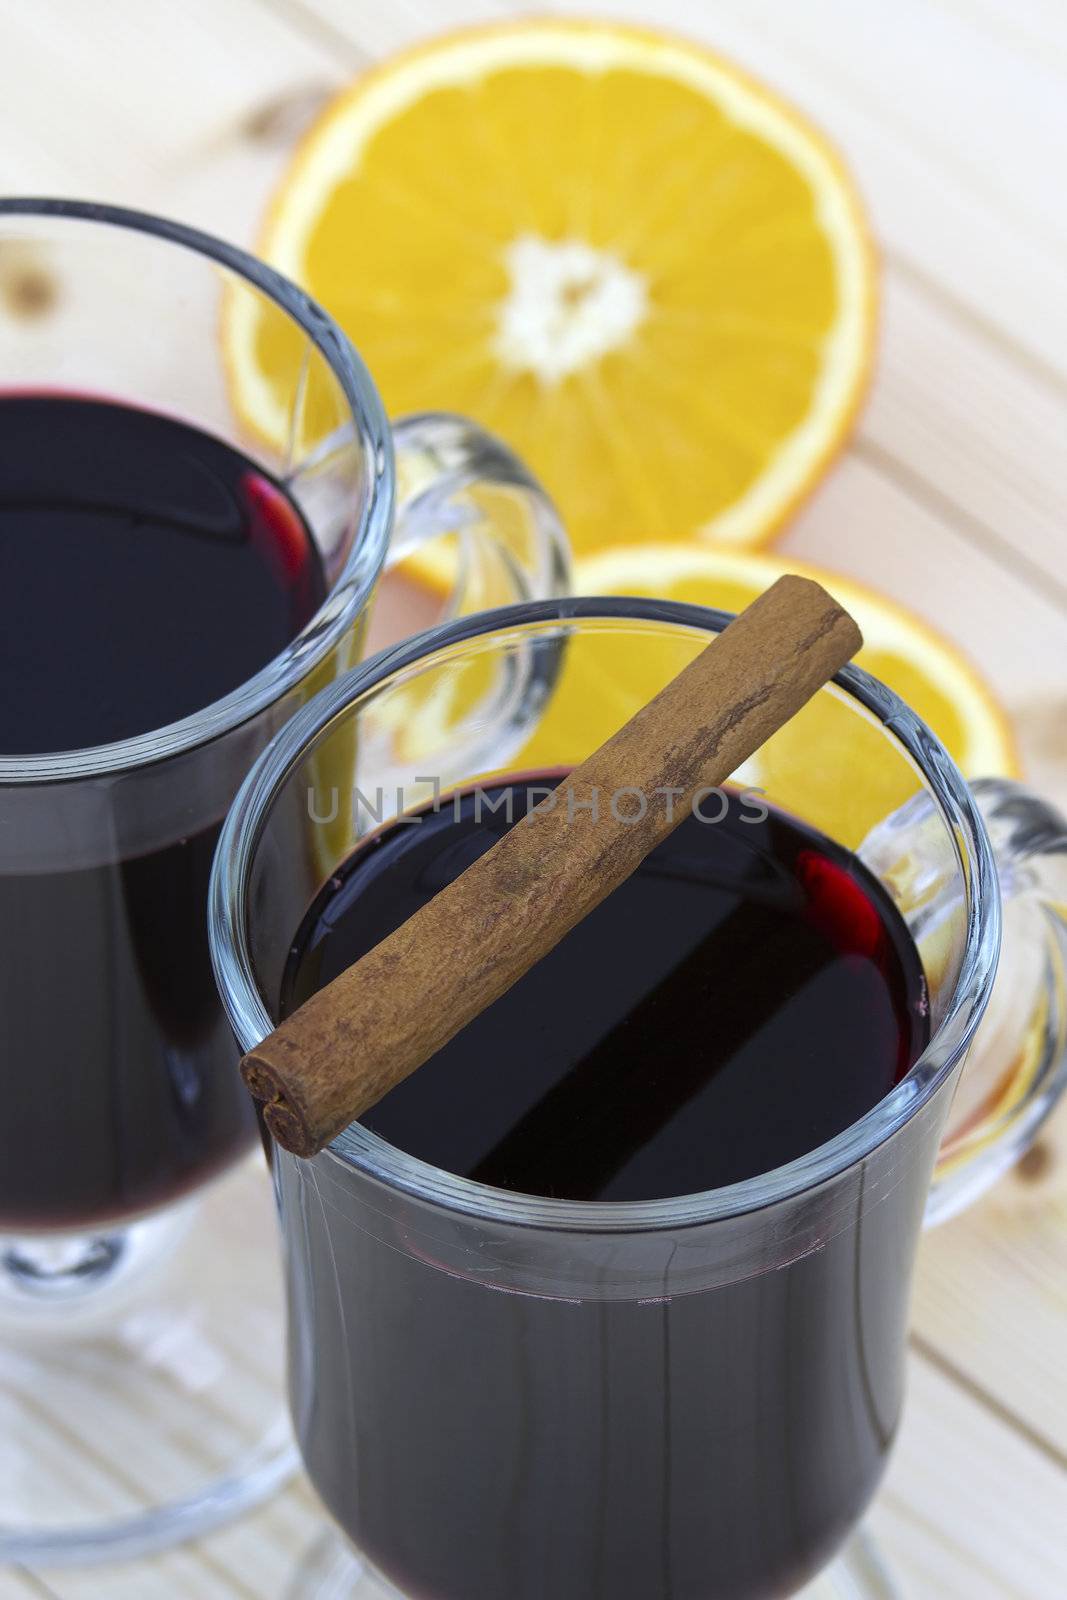 hot wine and cinnamon stick by miradrozdowski